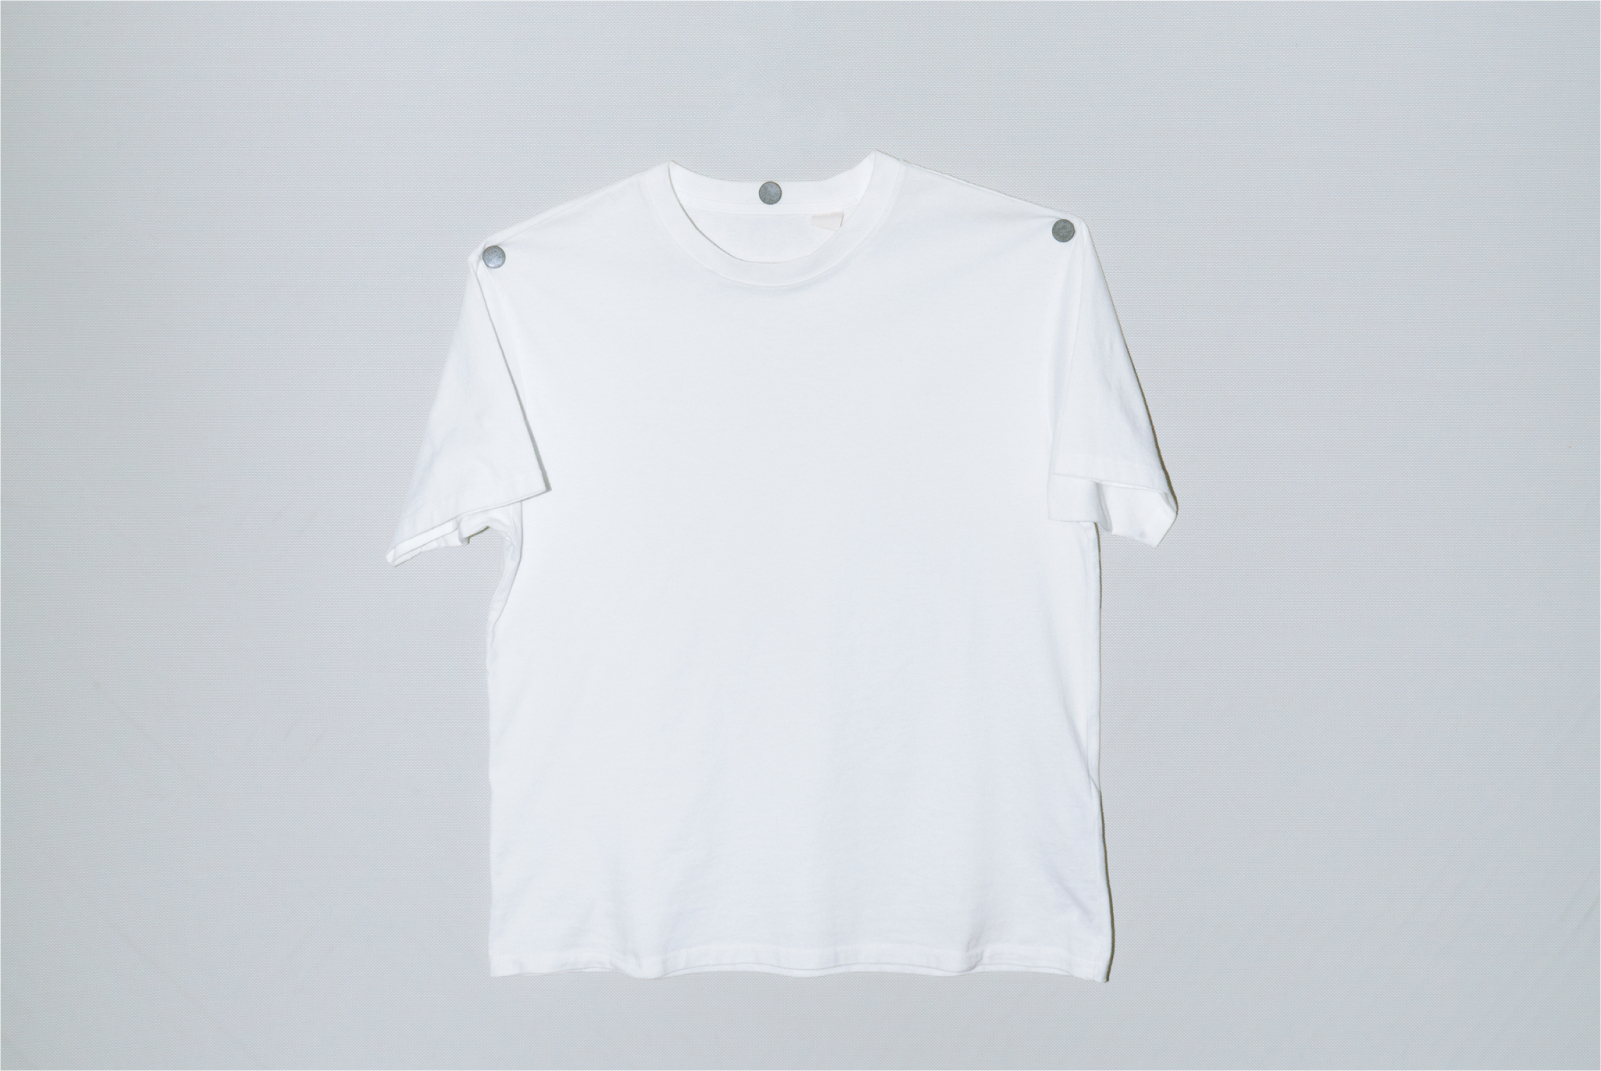 WWW T-Shirt 02 - Bendito Mockup